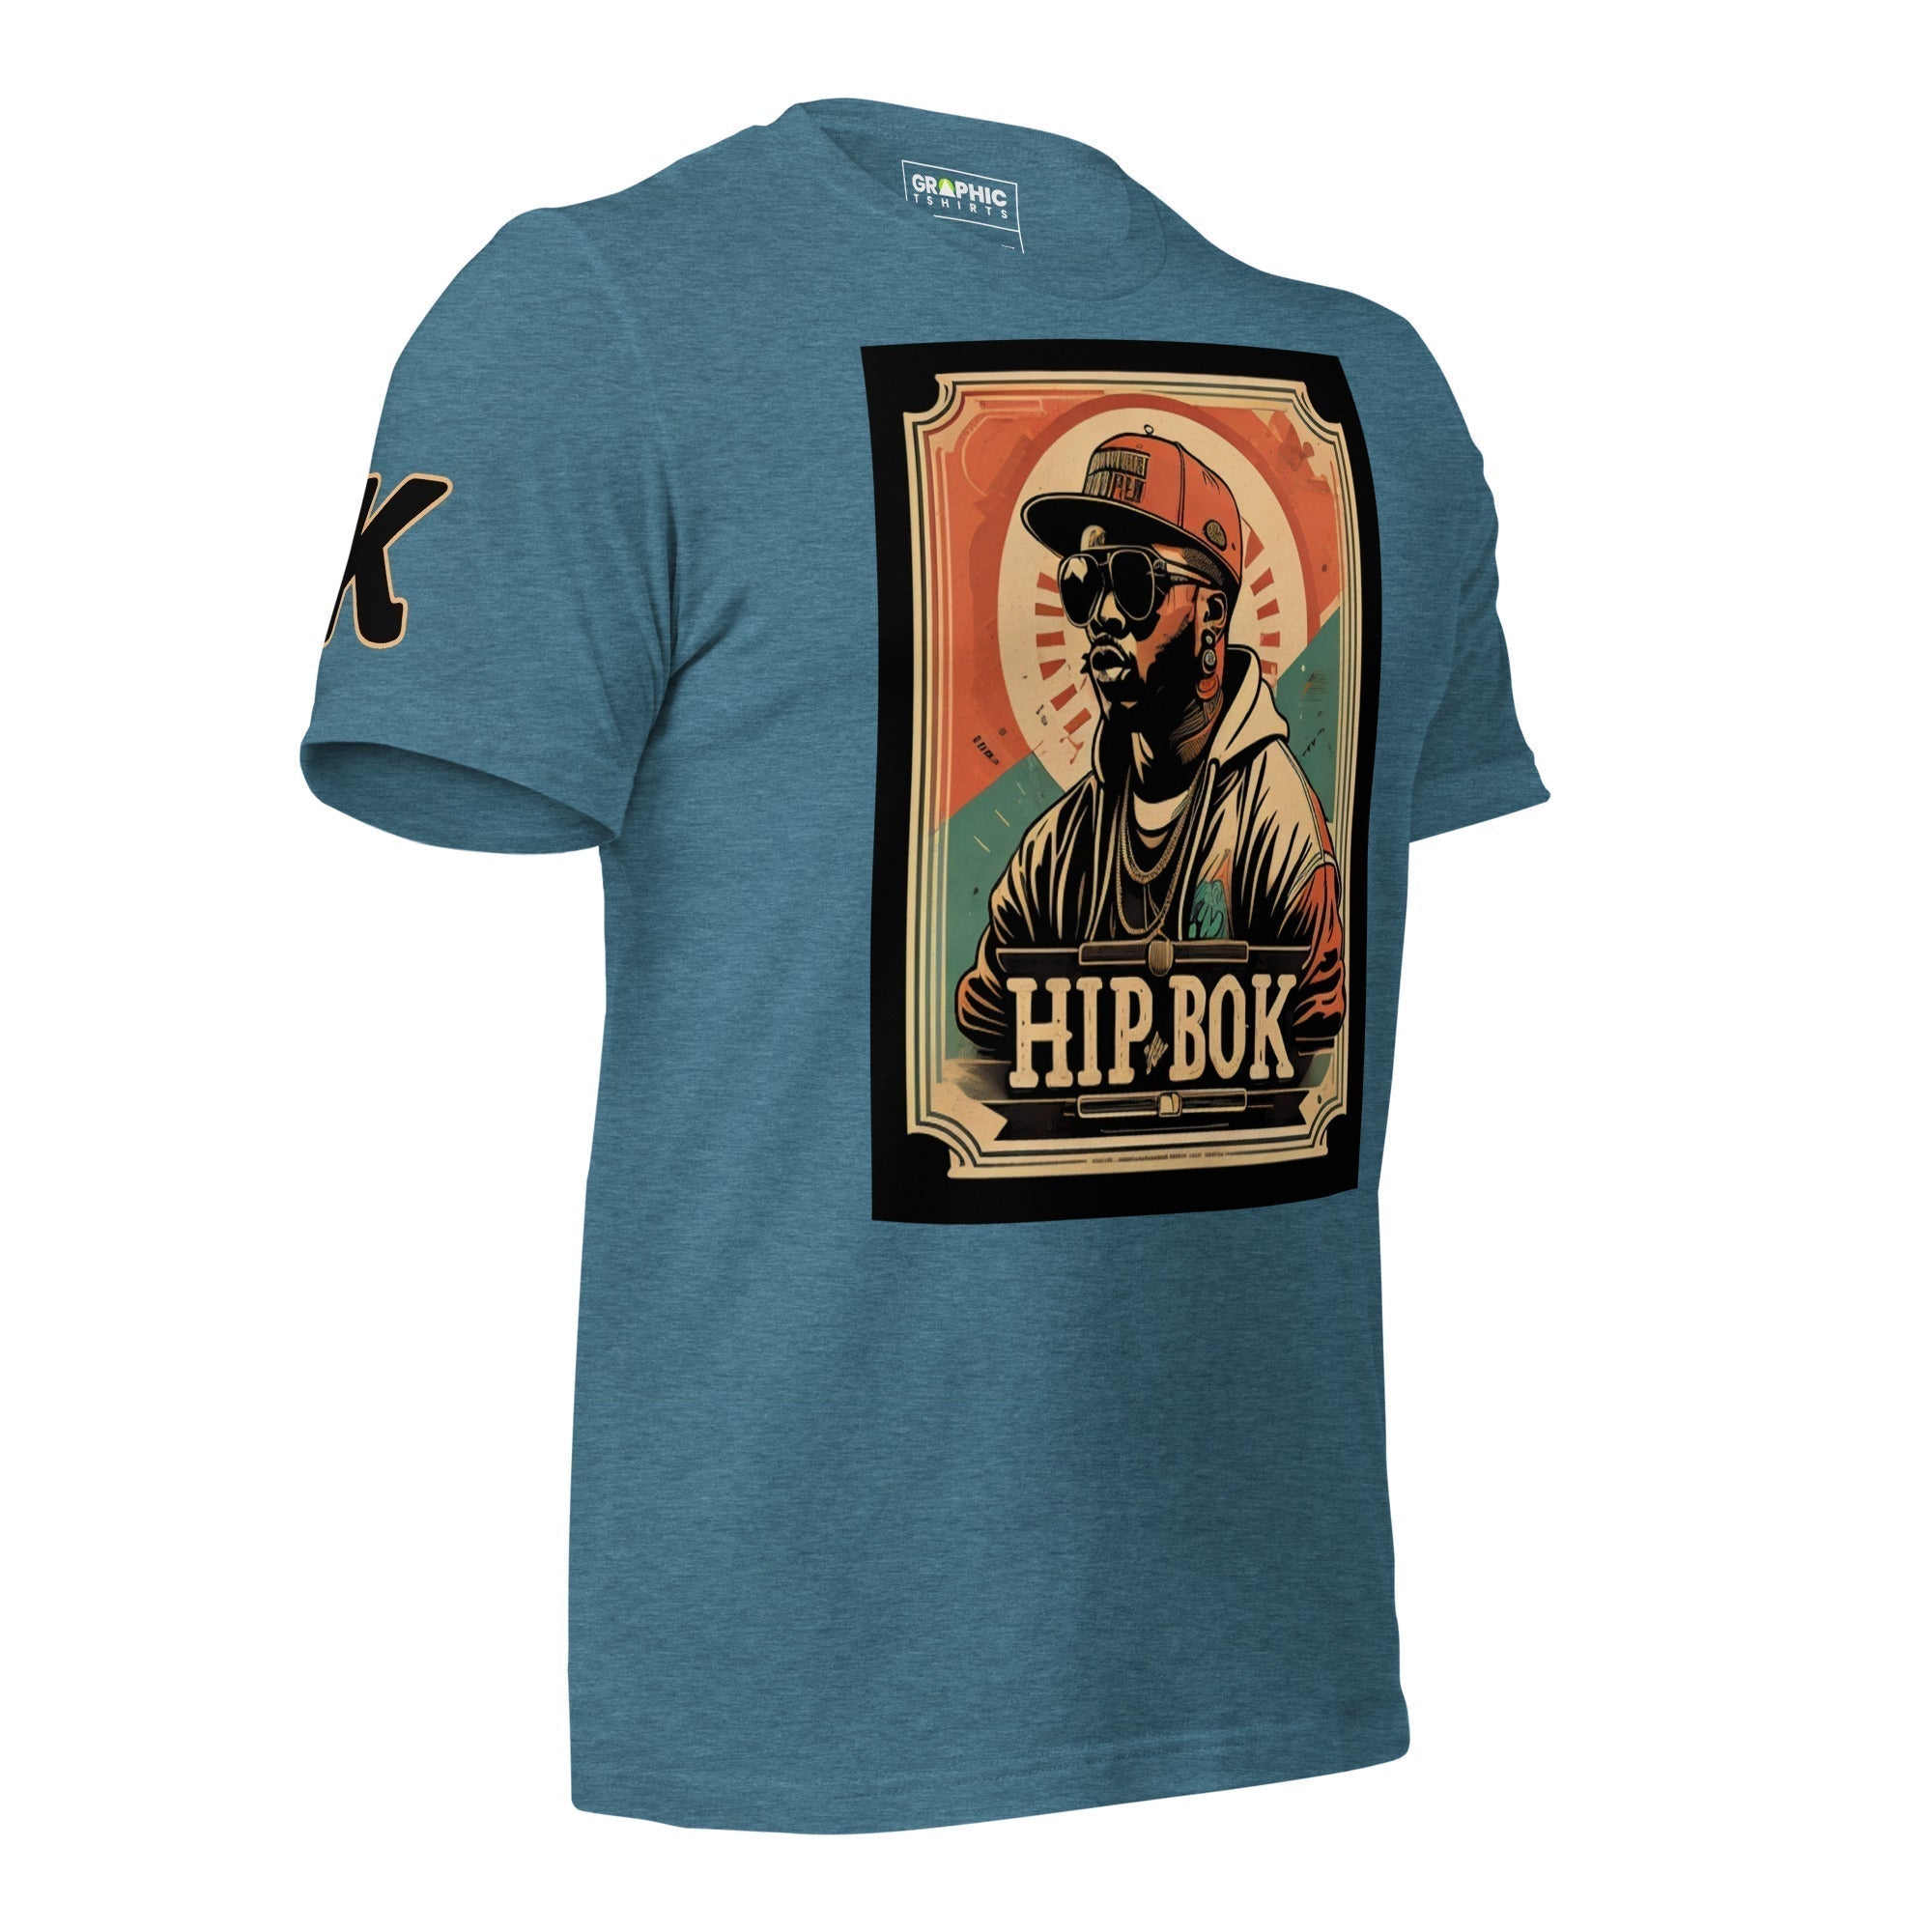 Unisex Crew Neck T-Shirt - Vintage Hip Hop Series v.1 - GRAPHIC T-SHIRTS